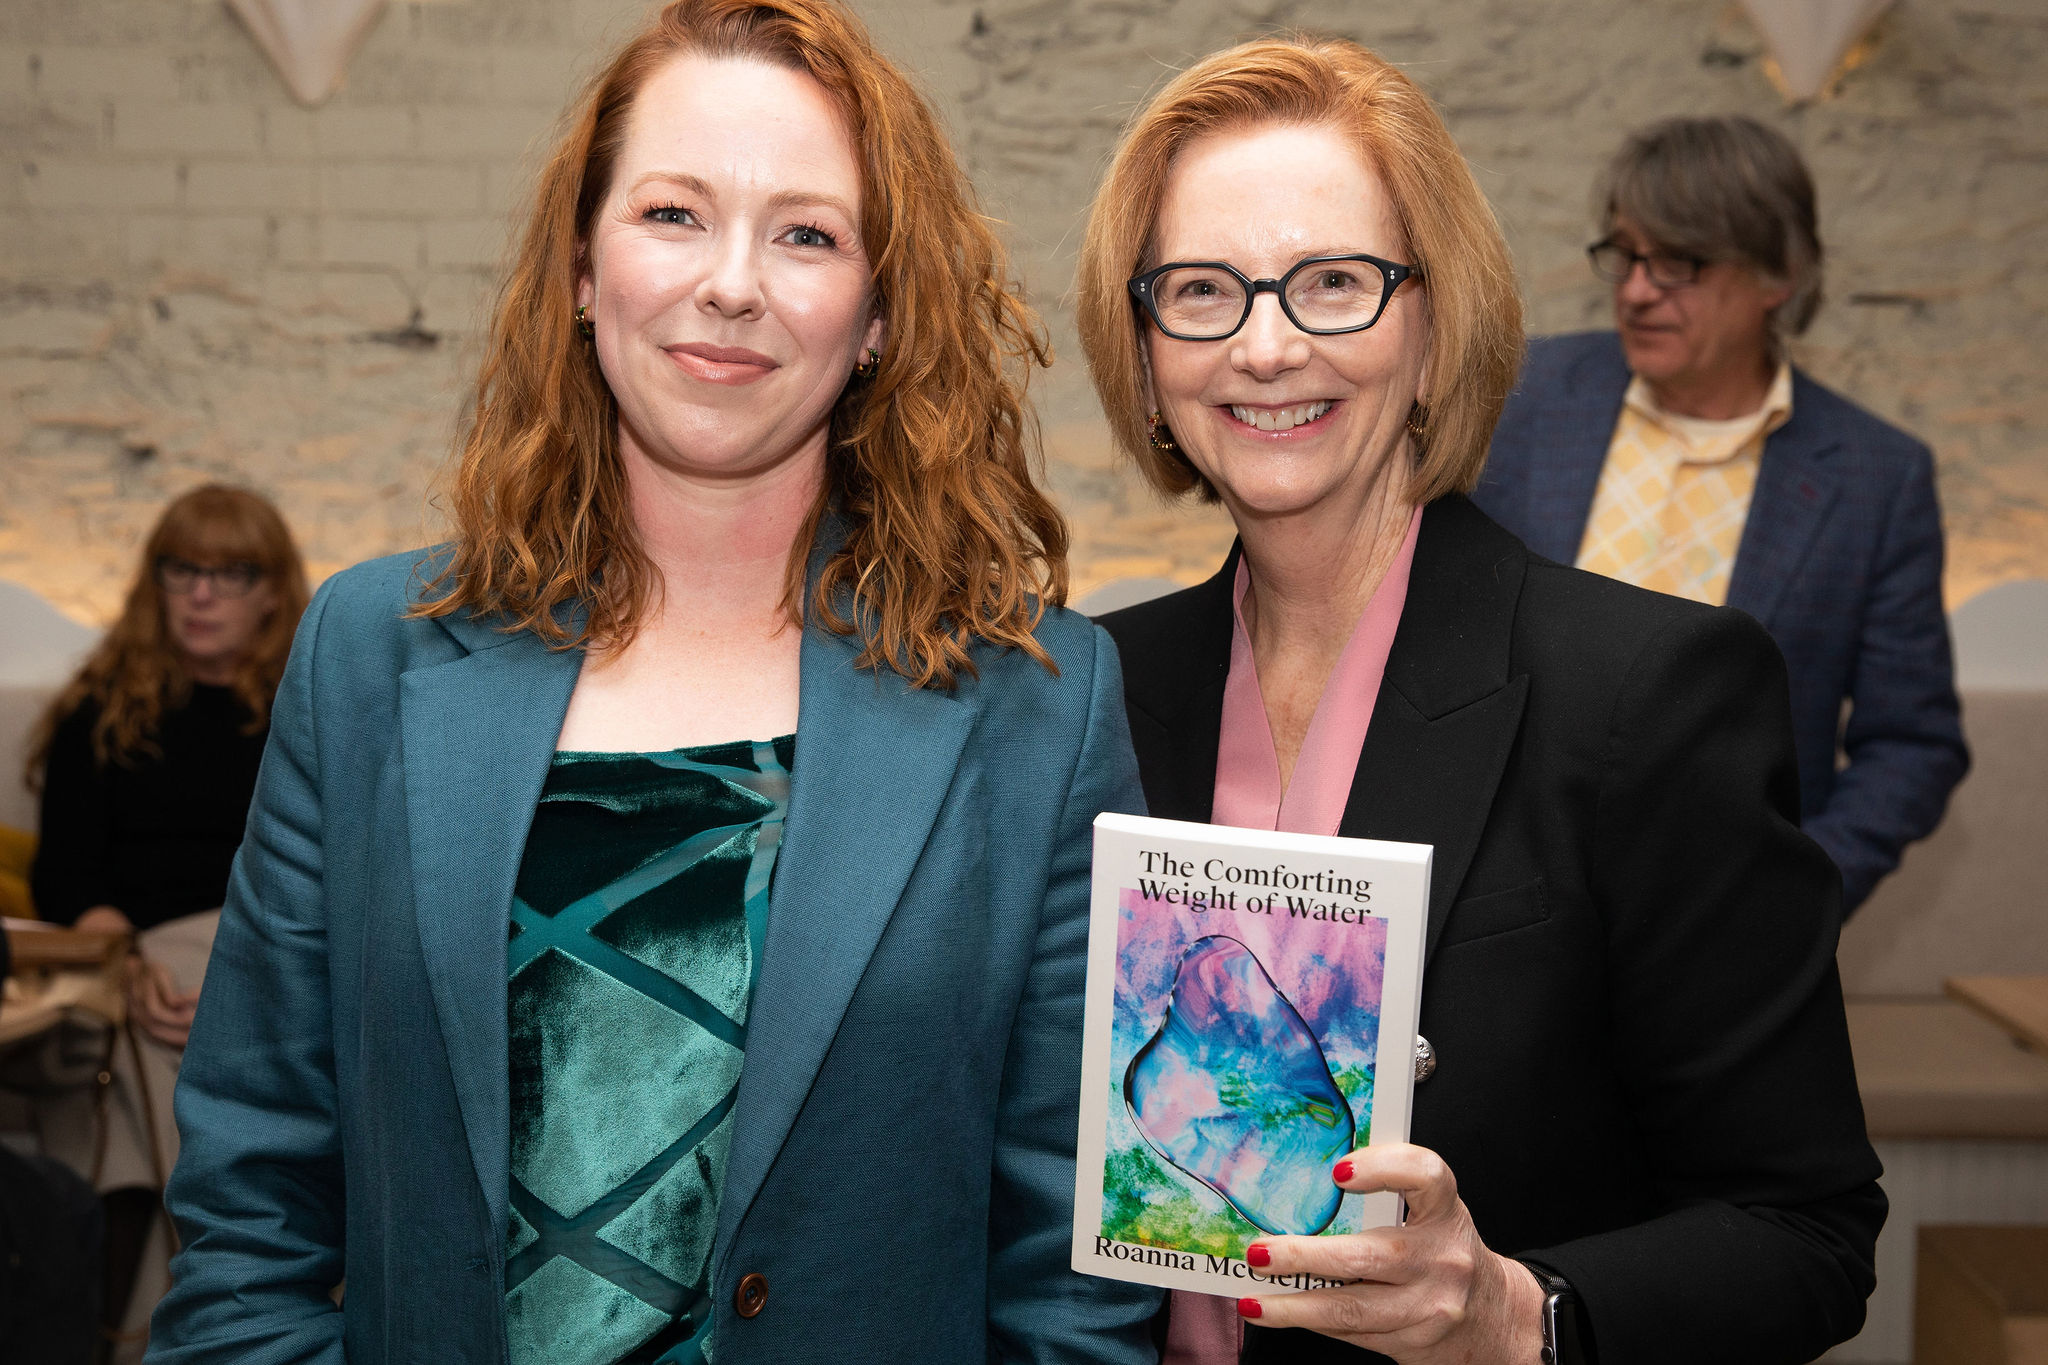 Author Roanna McClelland with friend Julia Gillard